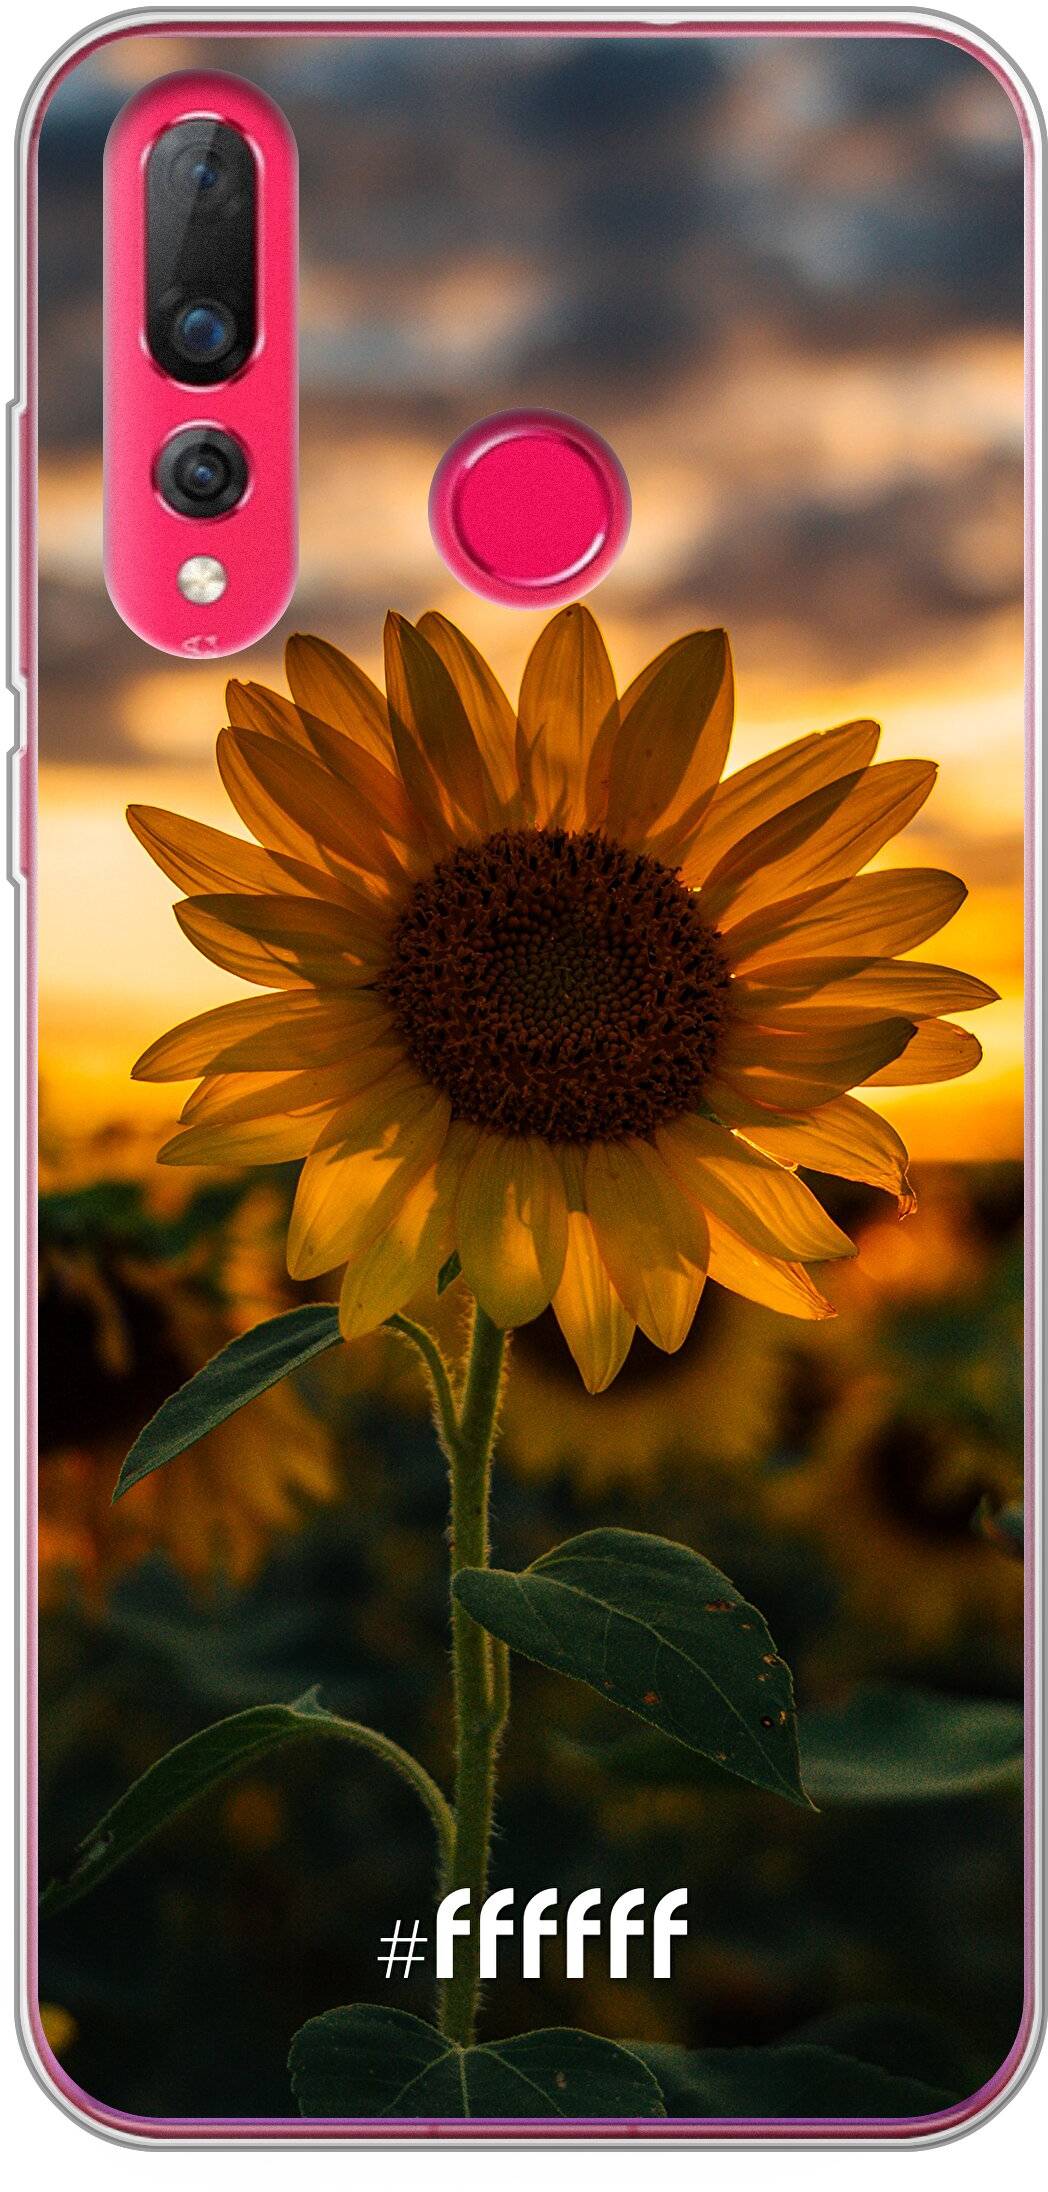 Sunset Sunflower P30 Lite